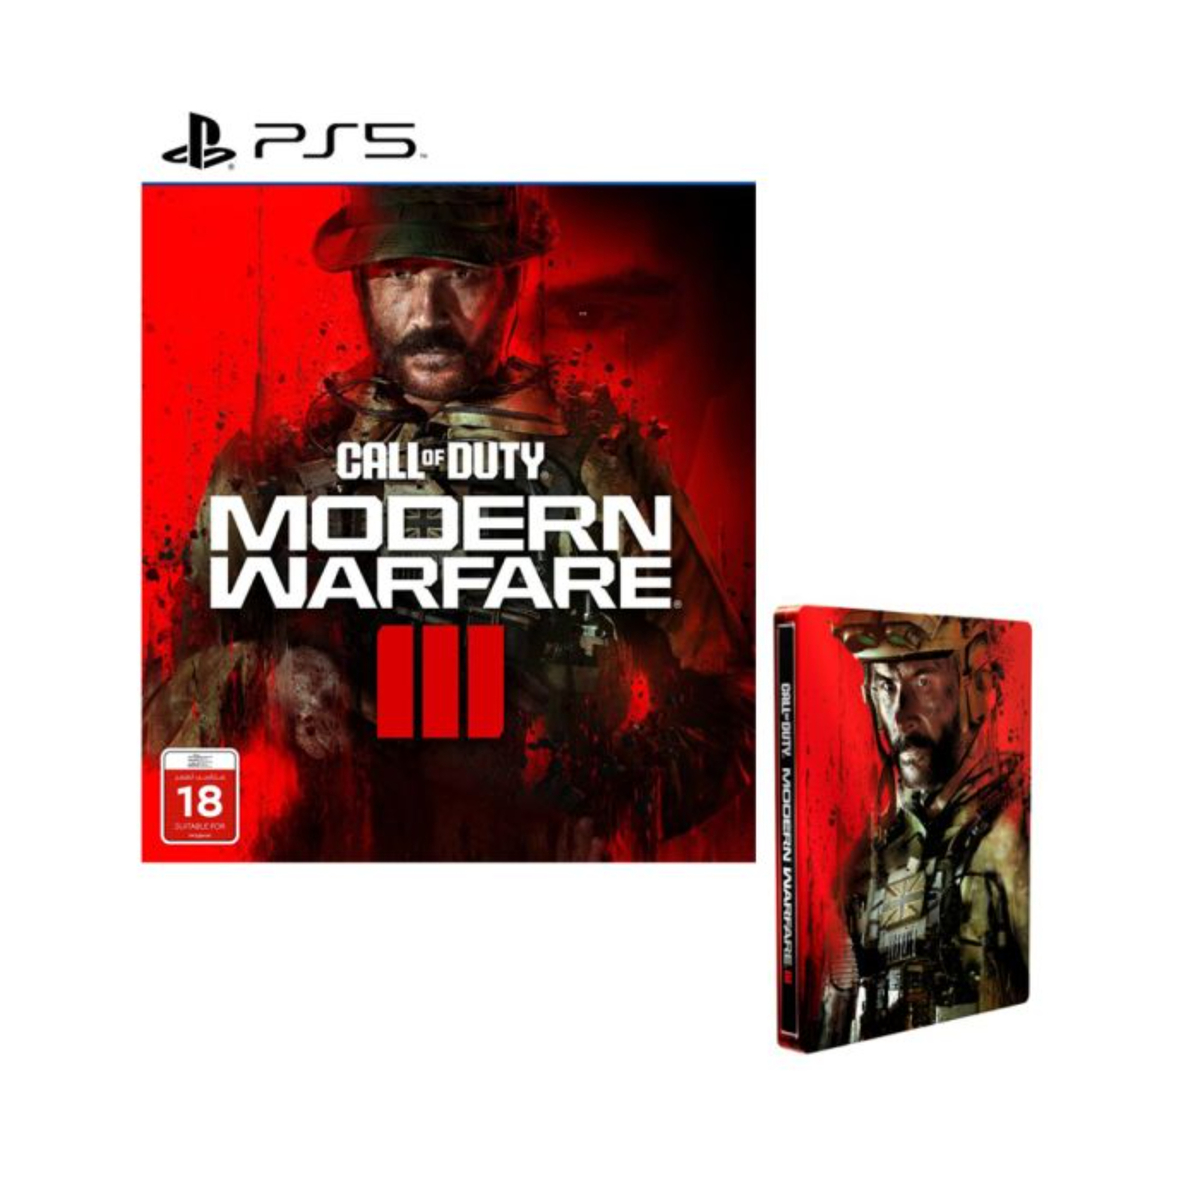 Call of Duty: Modern Warfare III & Steelbook PS5 Online at Best Price, Titles